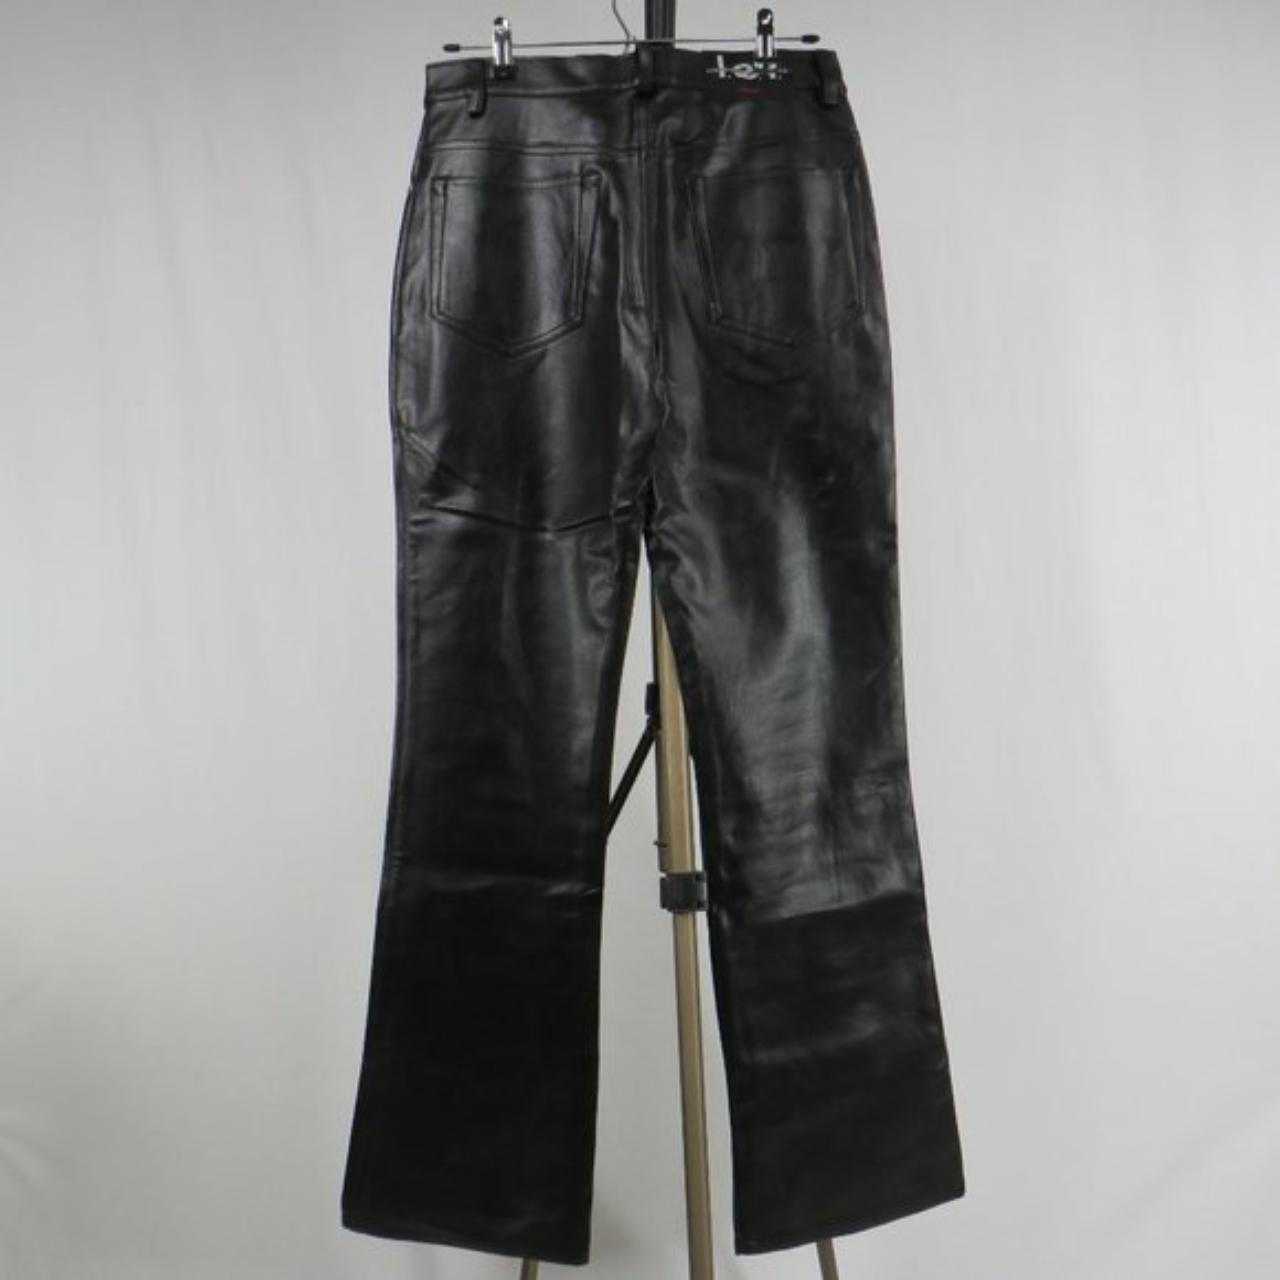 Rare Black l.e.i. faux leather high-rise pants with... - Depop